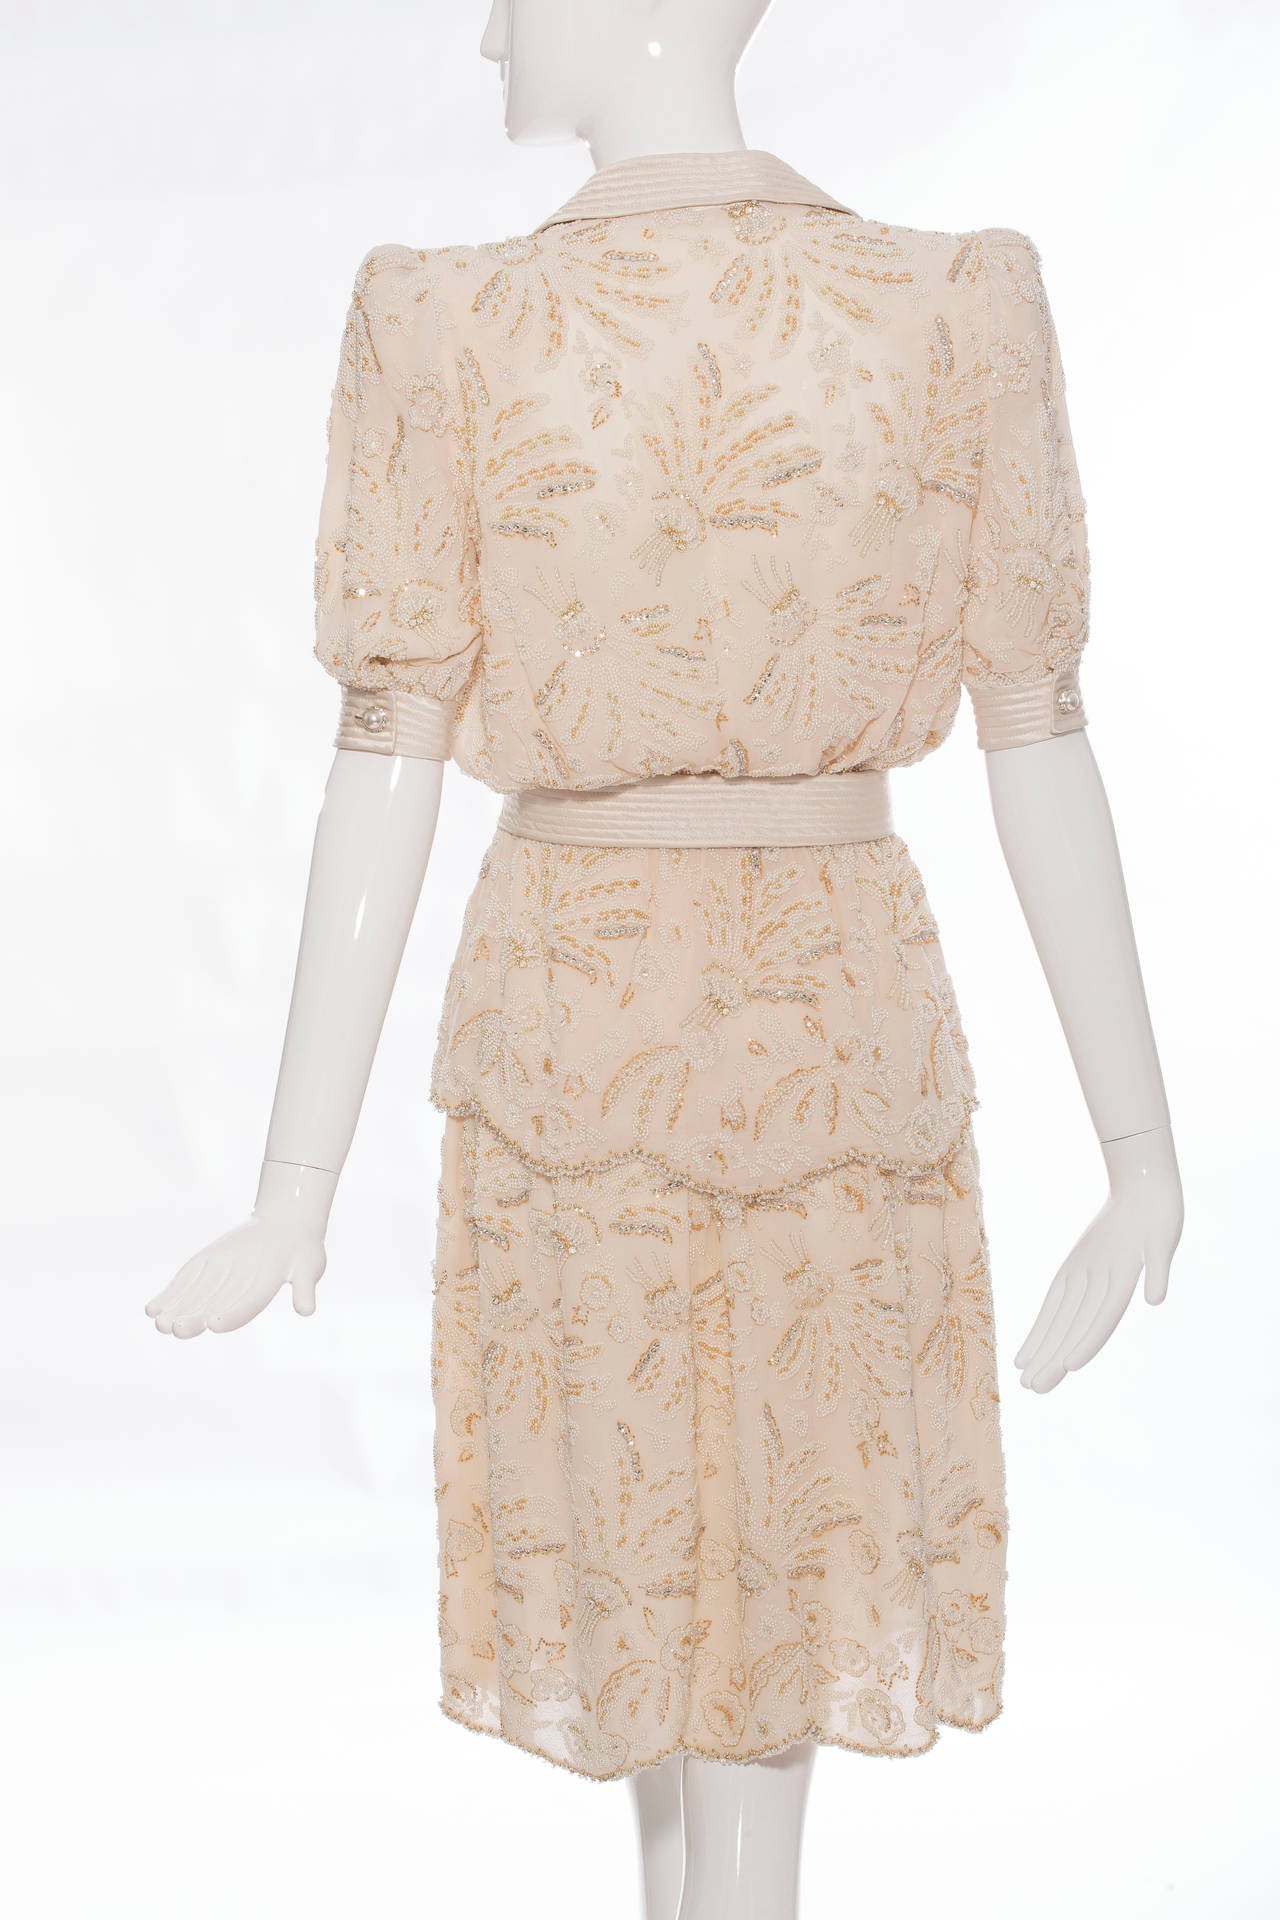 Valentino Haute Couture Cream Silk Chiffon Embroidered Skirt Suit, Circa 1980s (Beige)